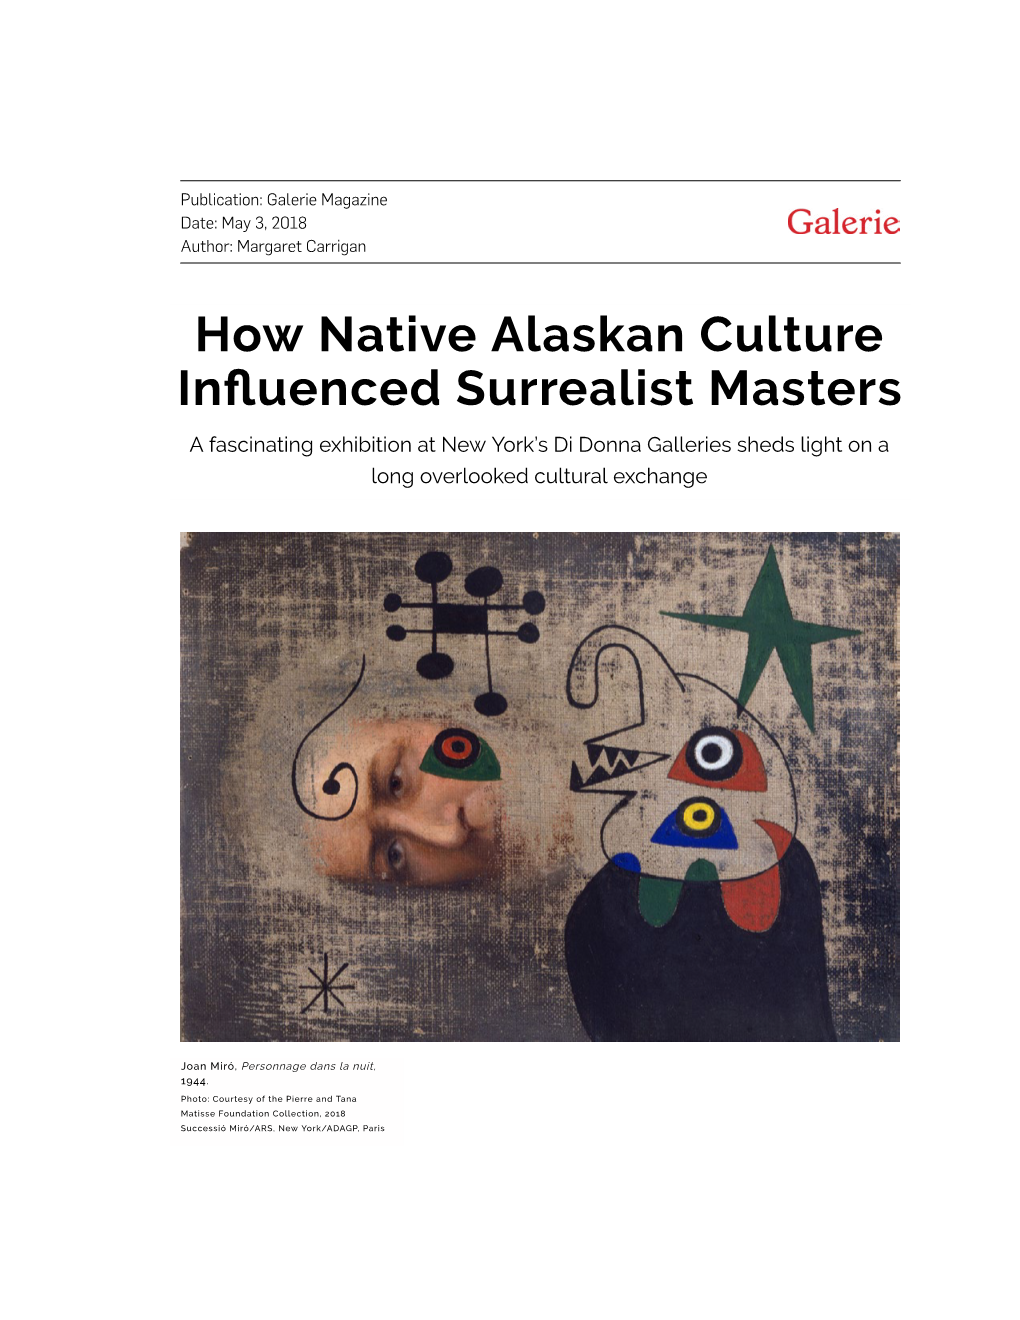 How Native Alaskan Culture in Uenced Surrealist Masters